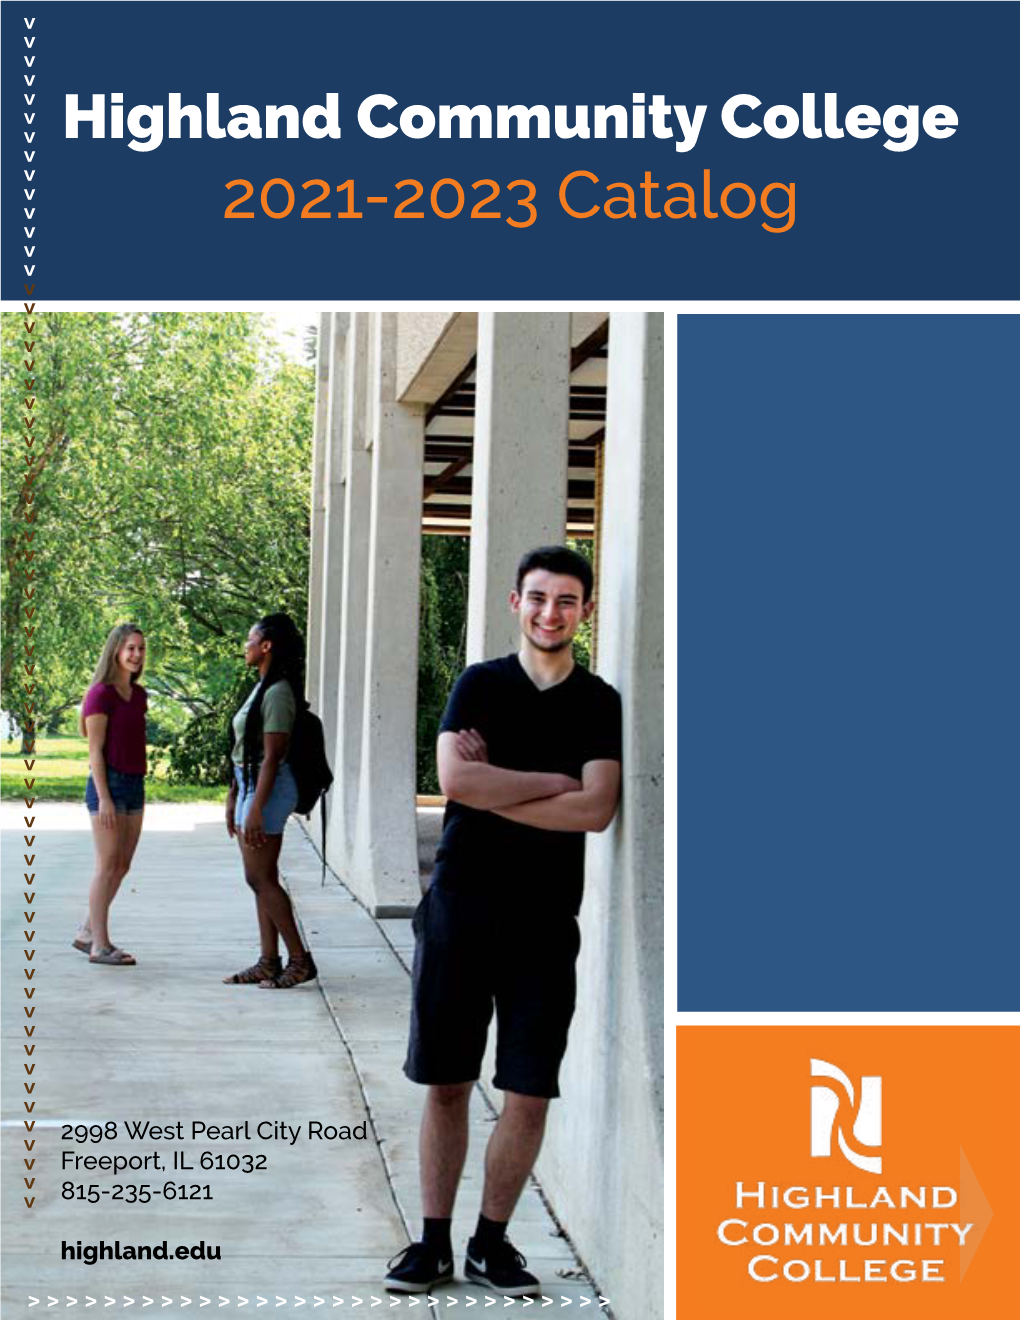 2021-2023 Catalog